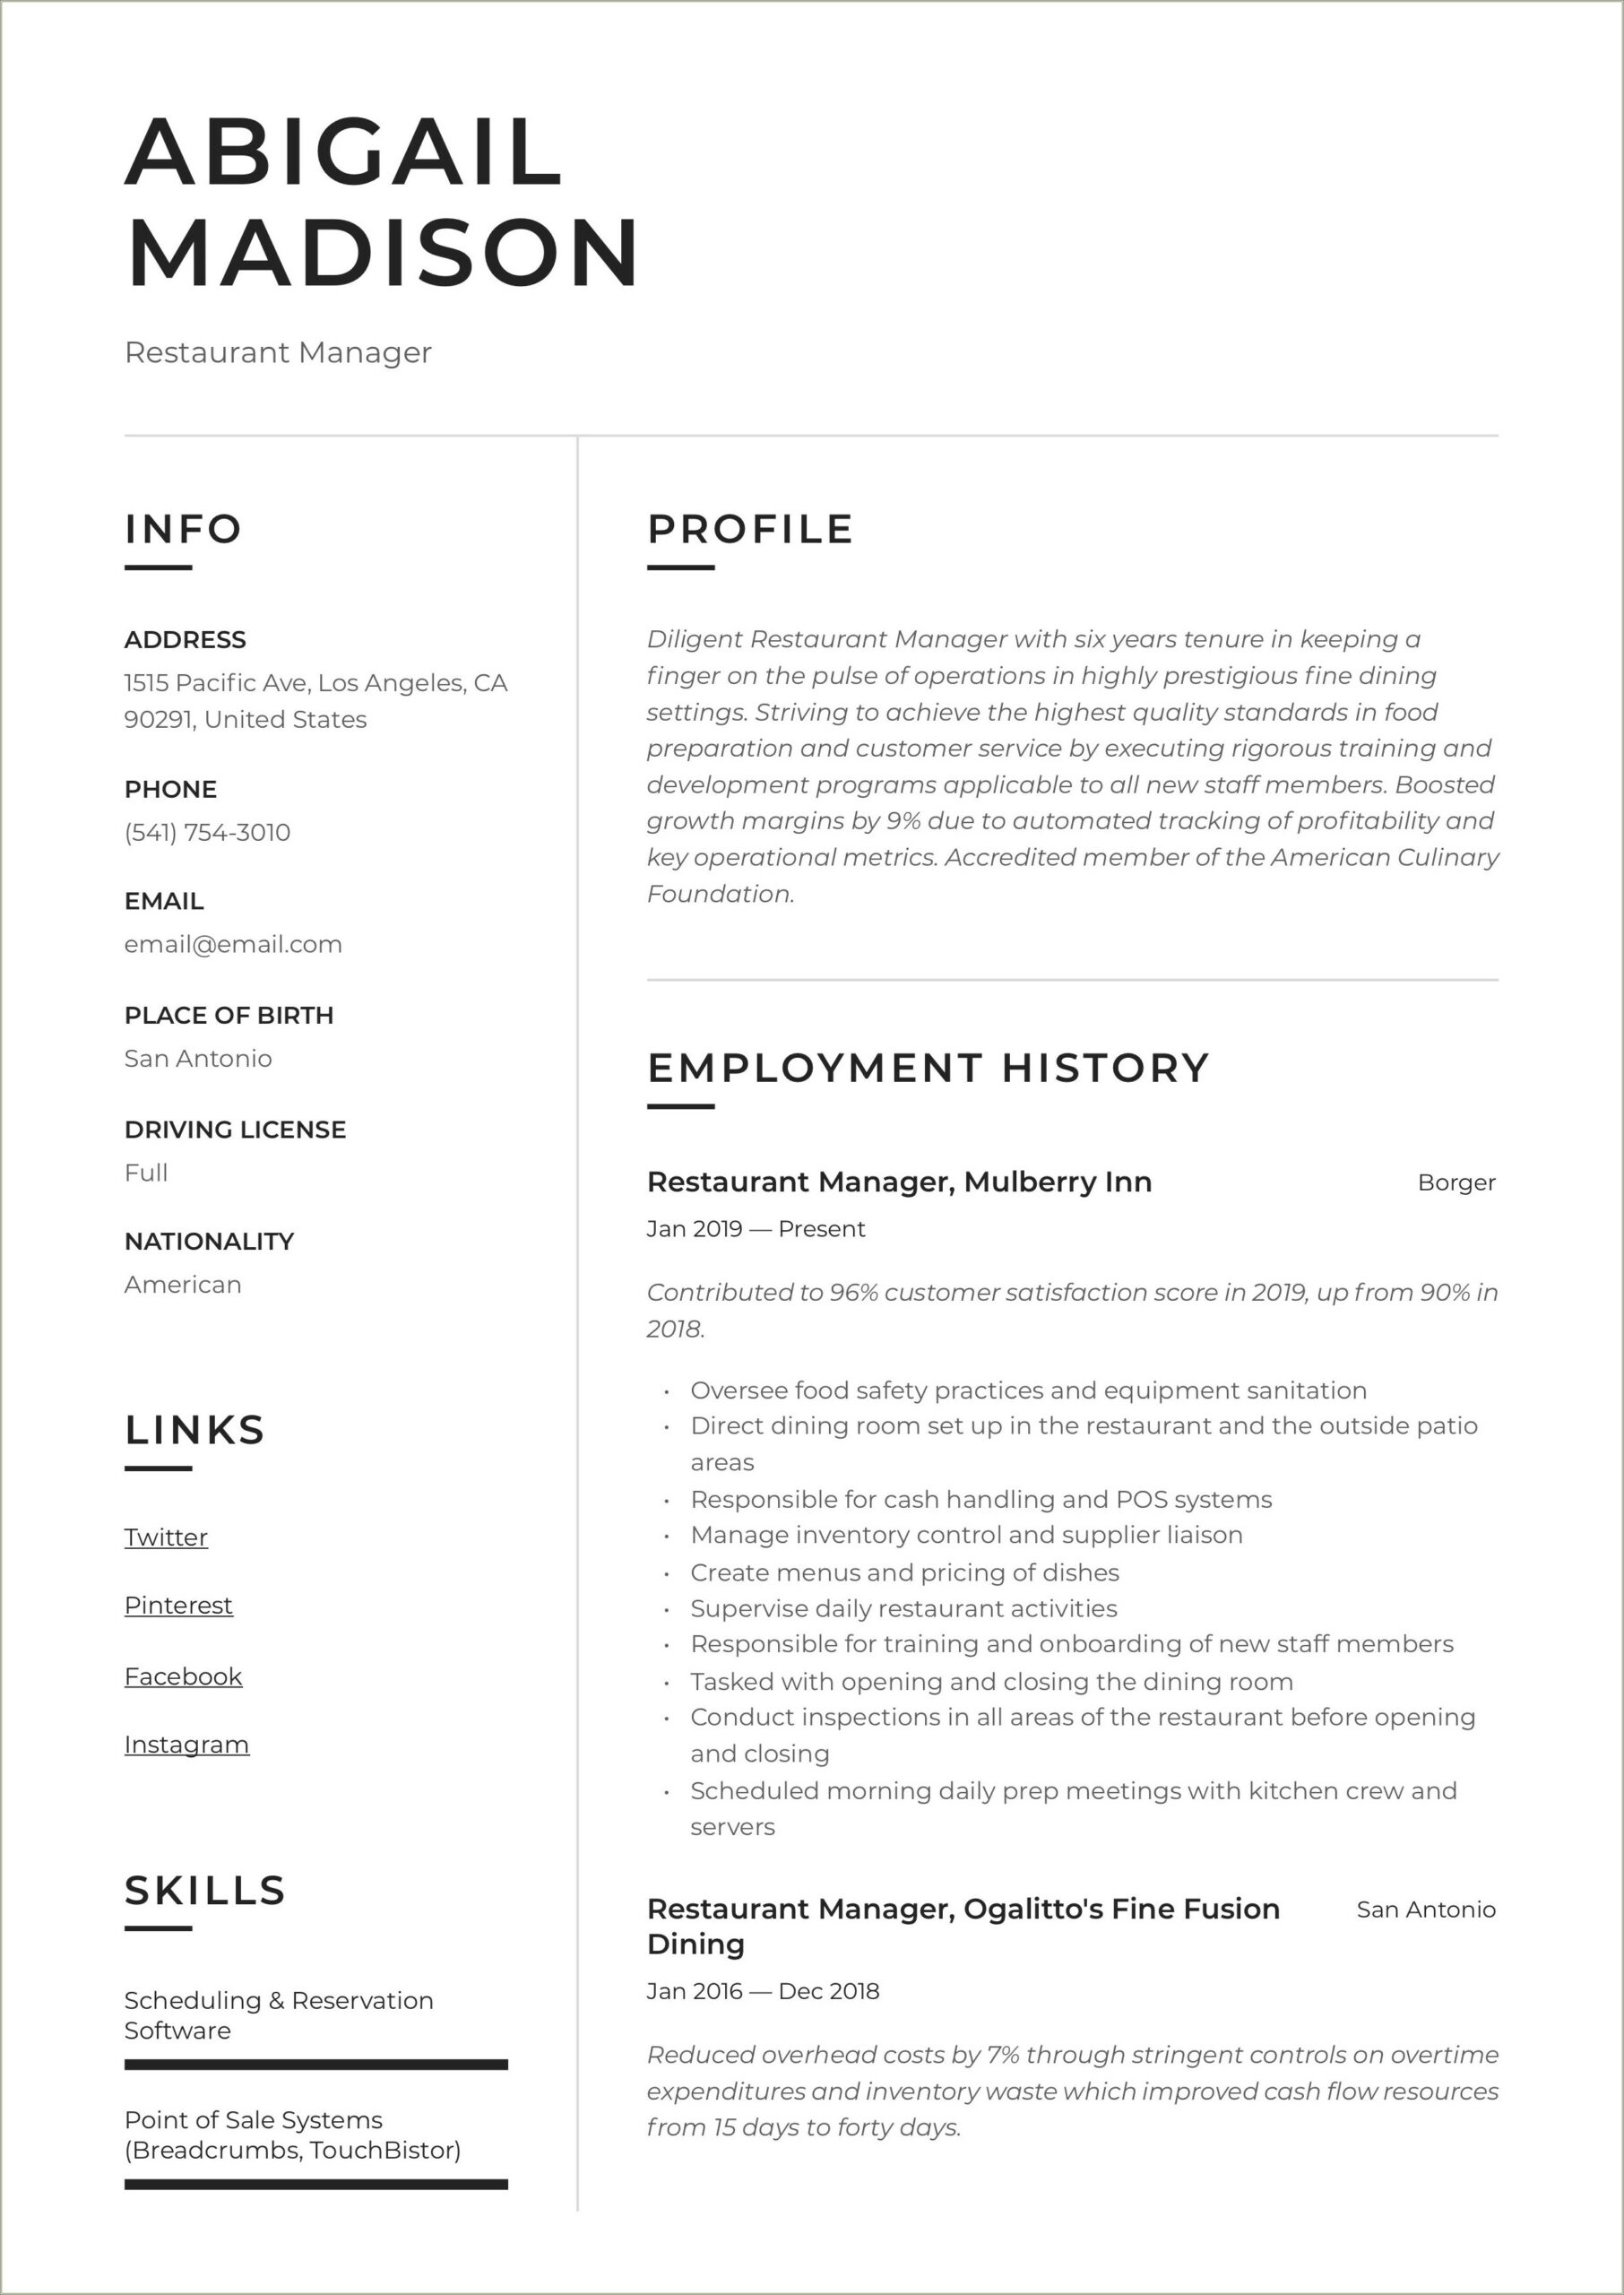 Restuaurant Manager Profile Summary On Resume